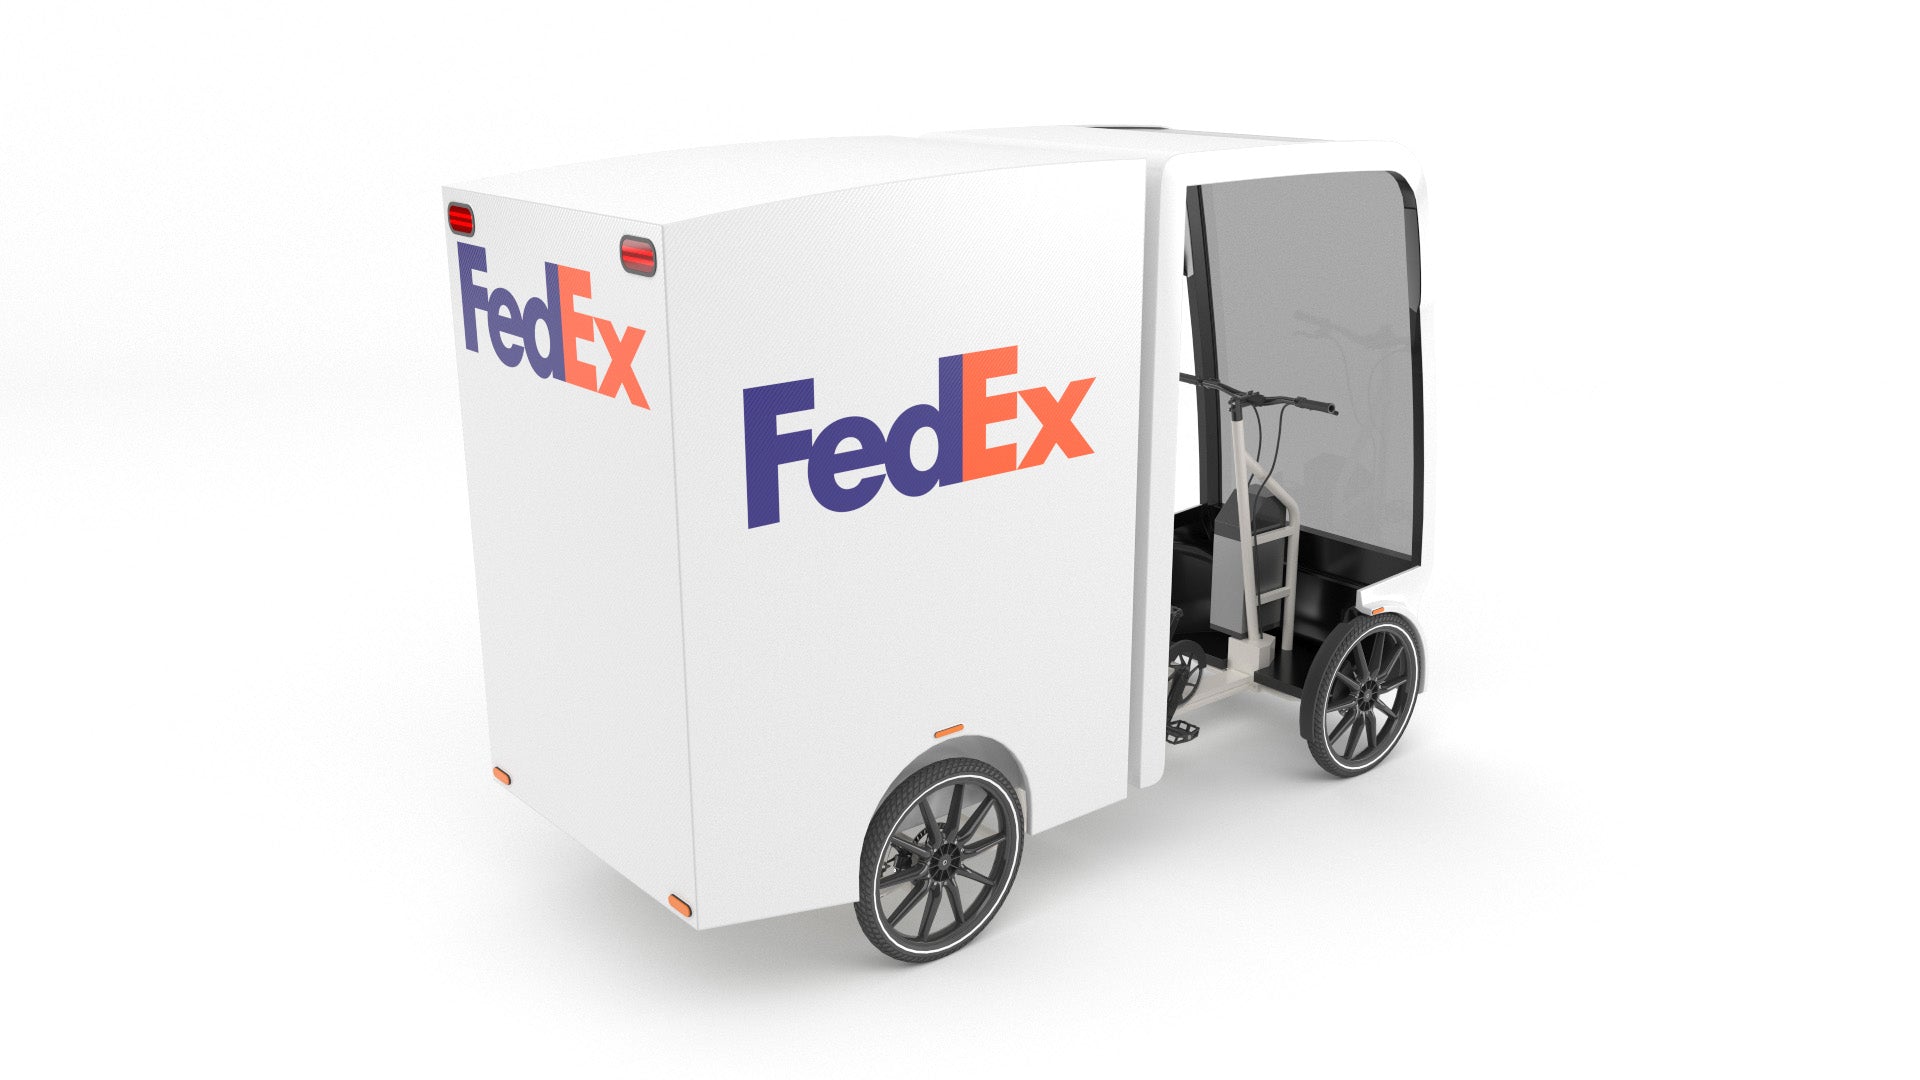 Fedex-Cargo-bike-3D-Model